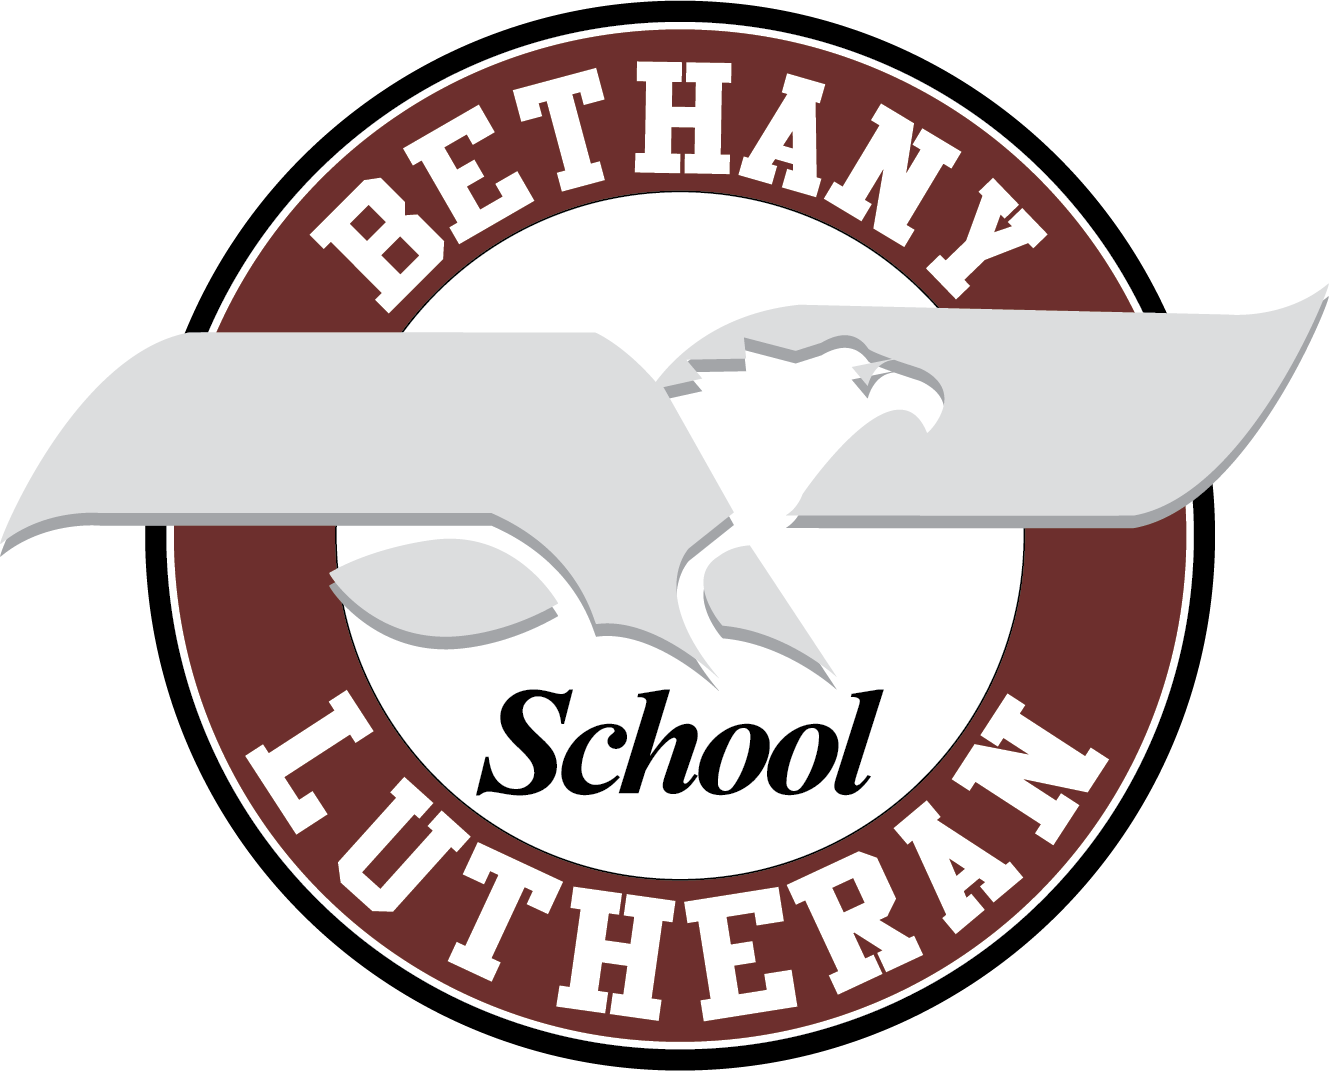 Bethany Lutheran School logo